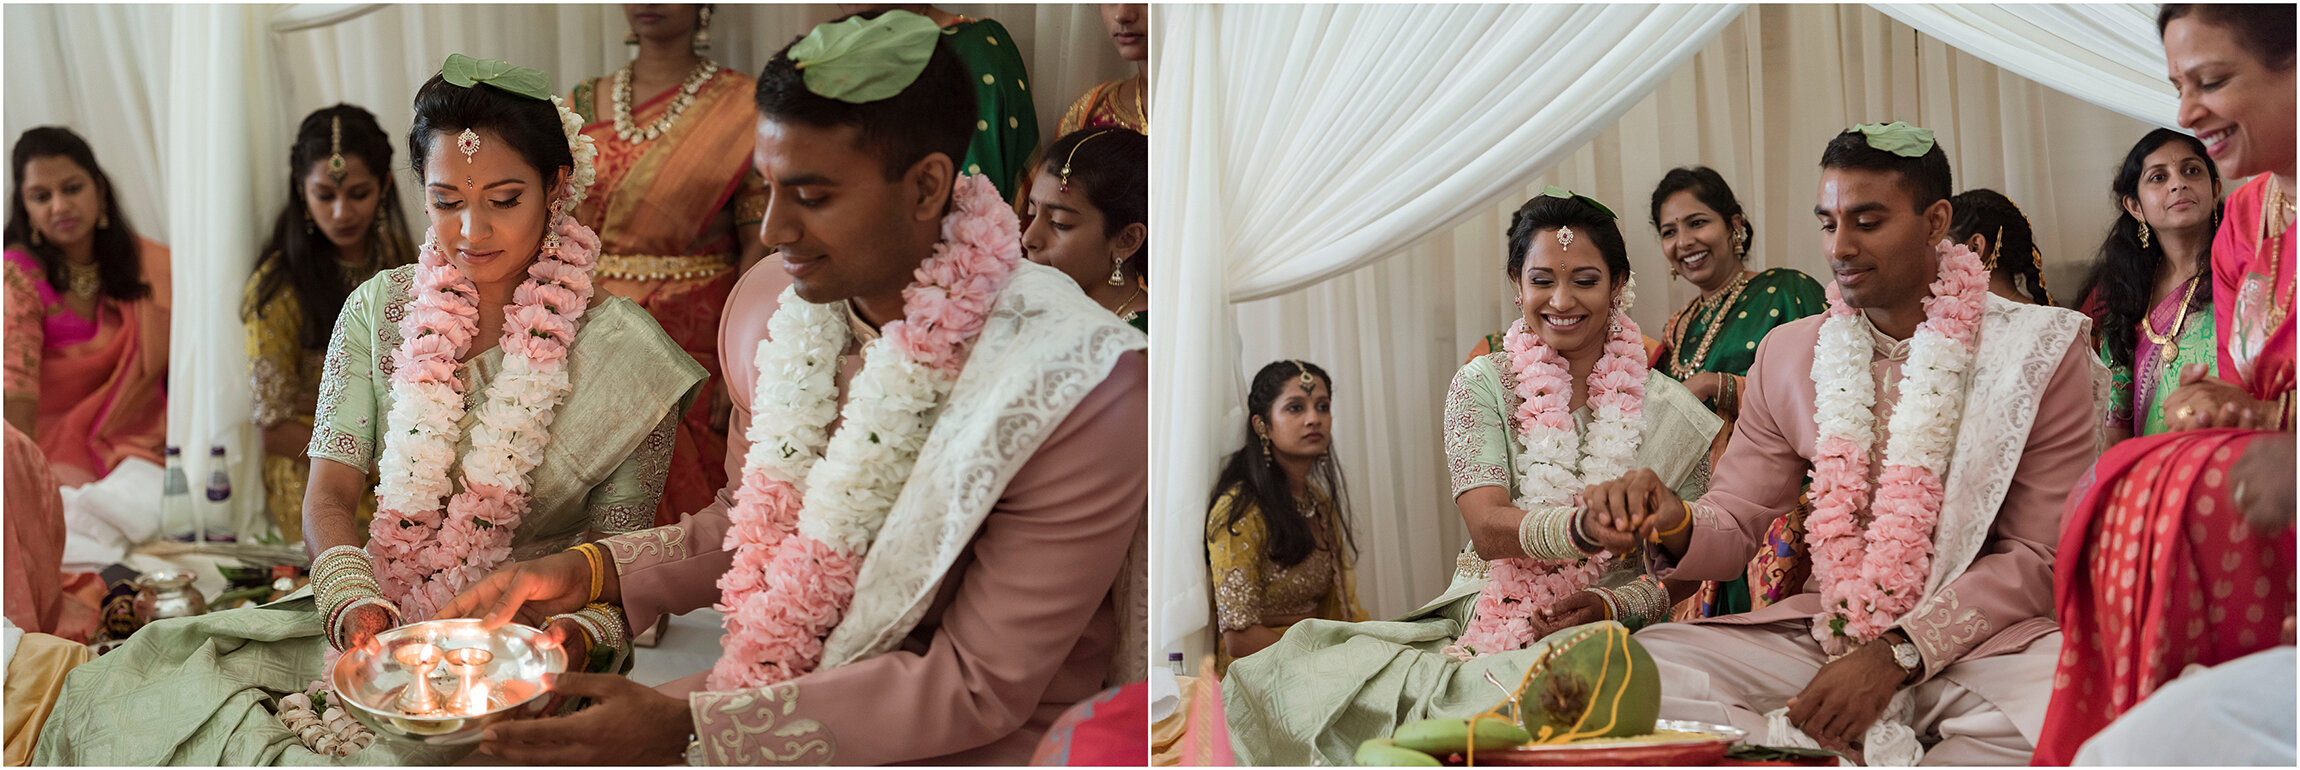 ©FianderFoto_Hindu Wedding_Bermuda_050.jpg